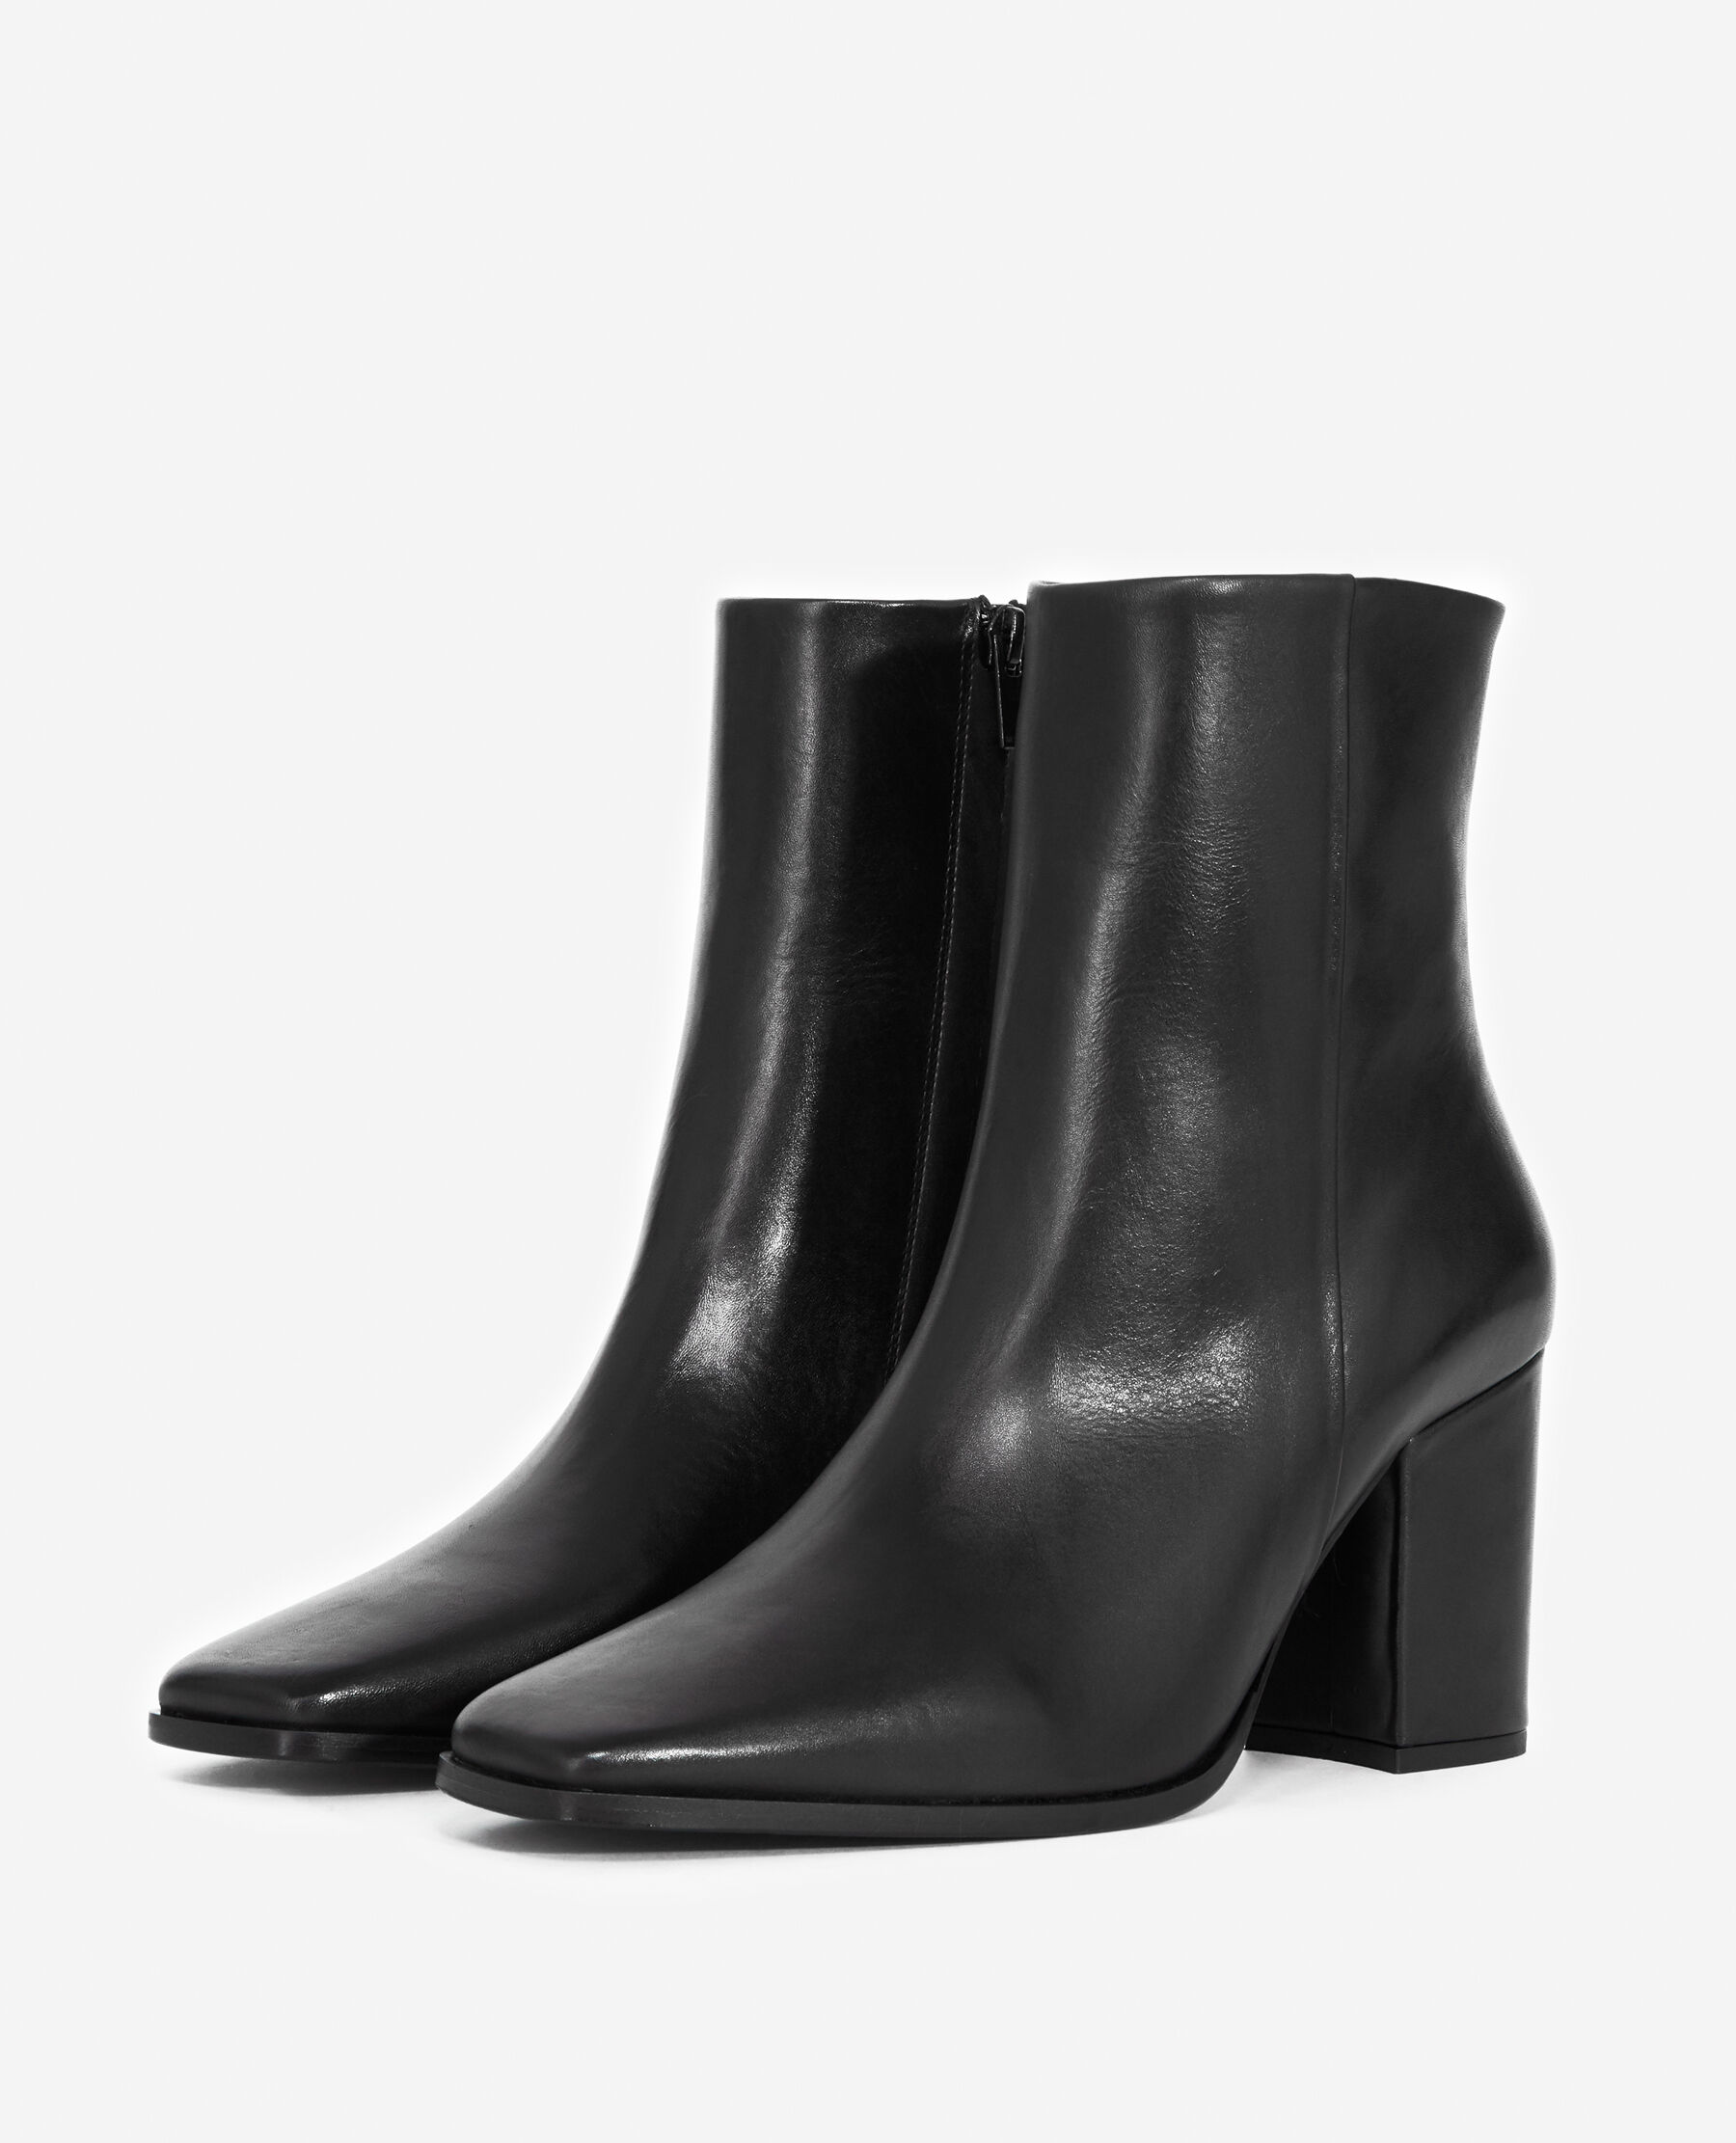 DOROTHY PERKINS Grey Suede High Heeled Ankle Boots U.K. 5 WORN ONCE! | eBay